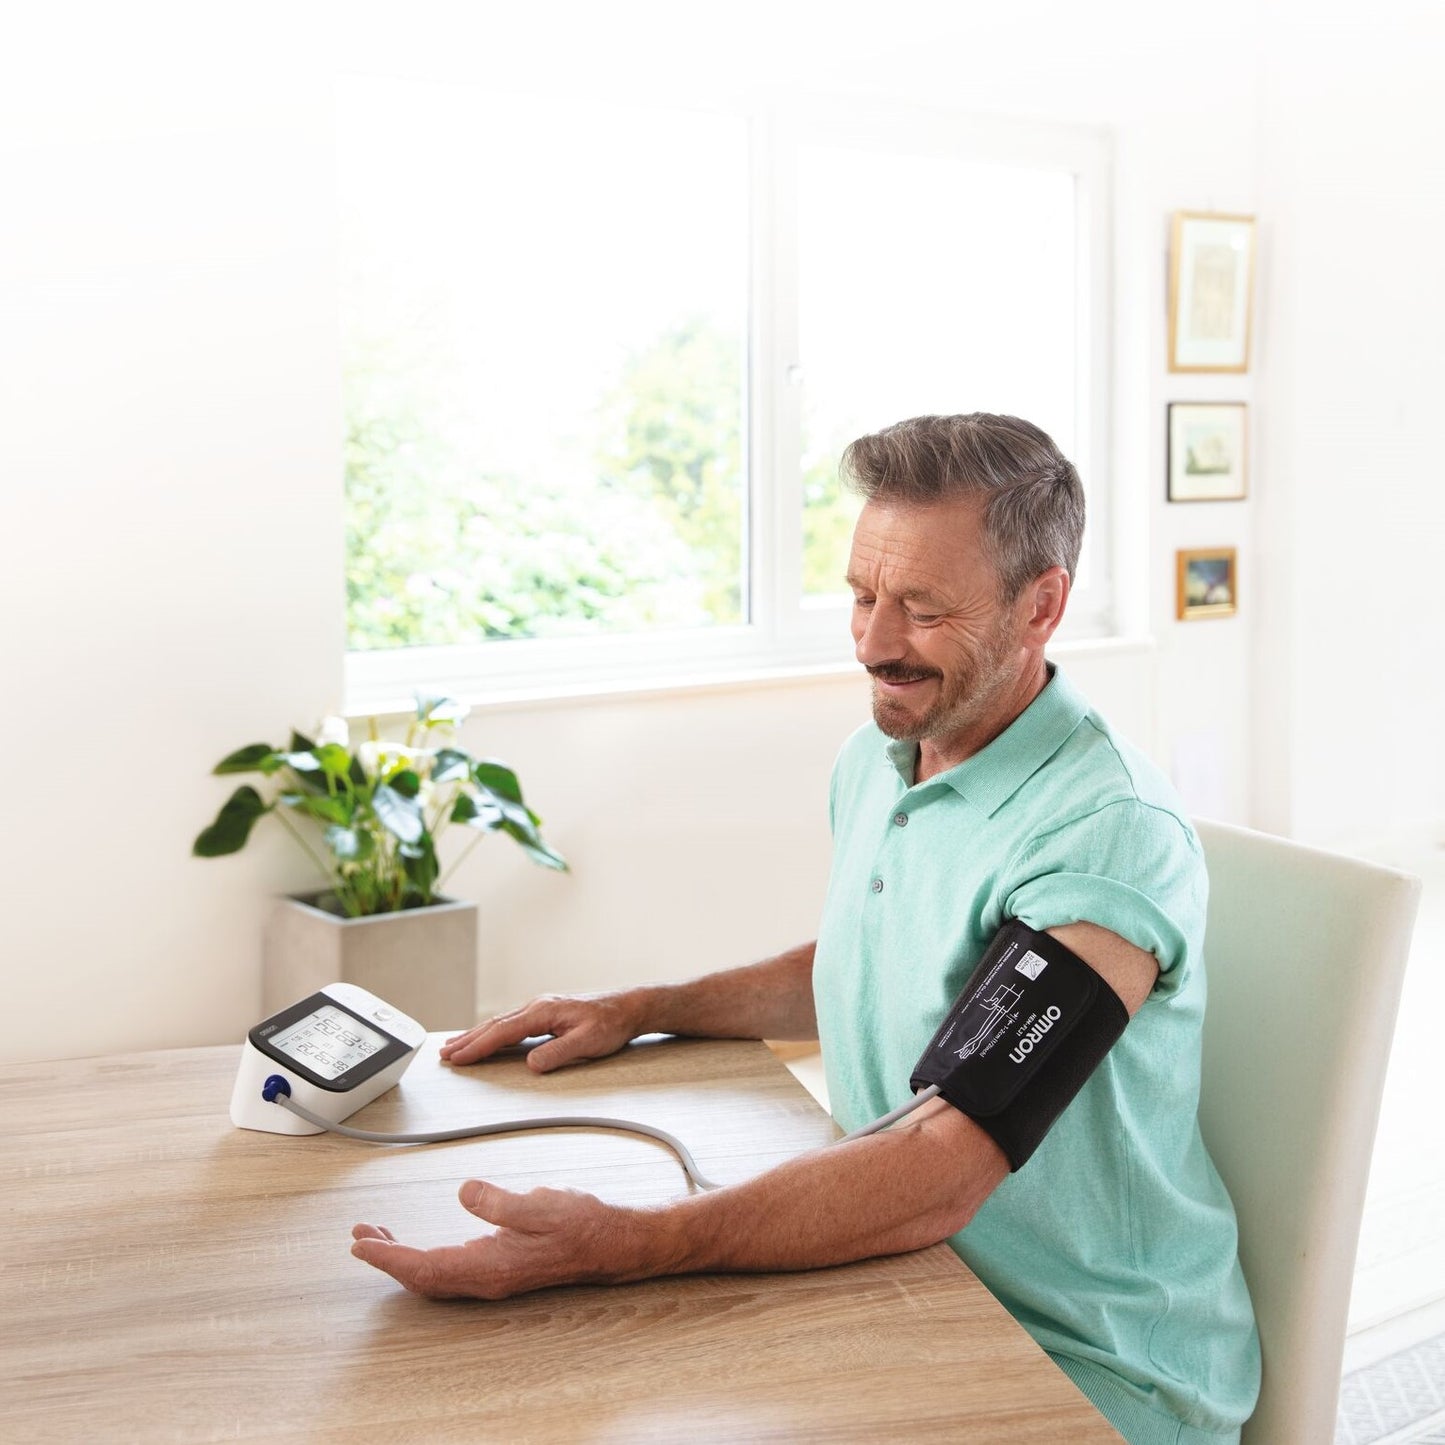 Omron Series 7 Blood Pressure Monitor - Upper Arm